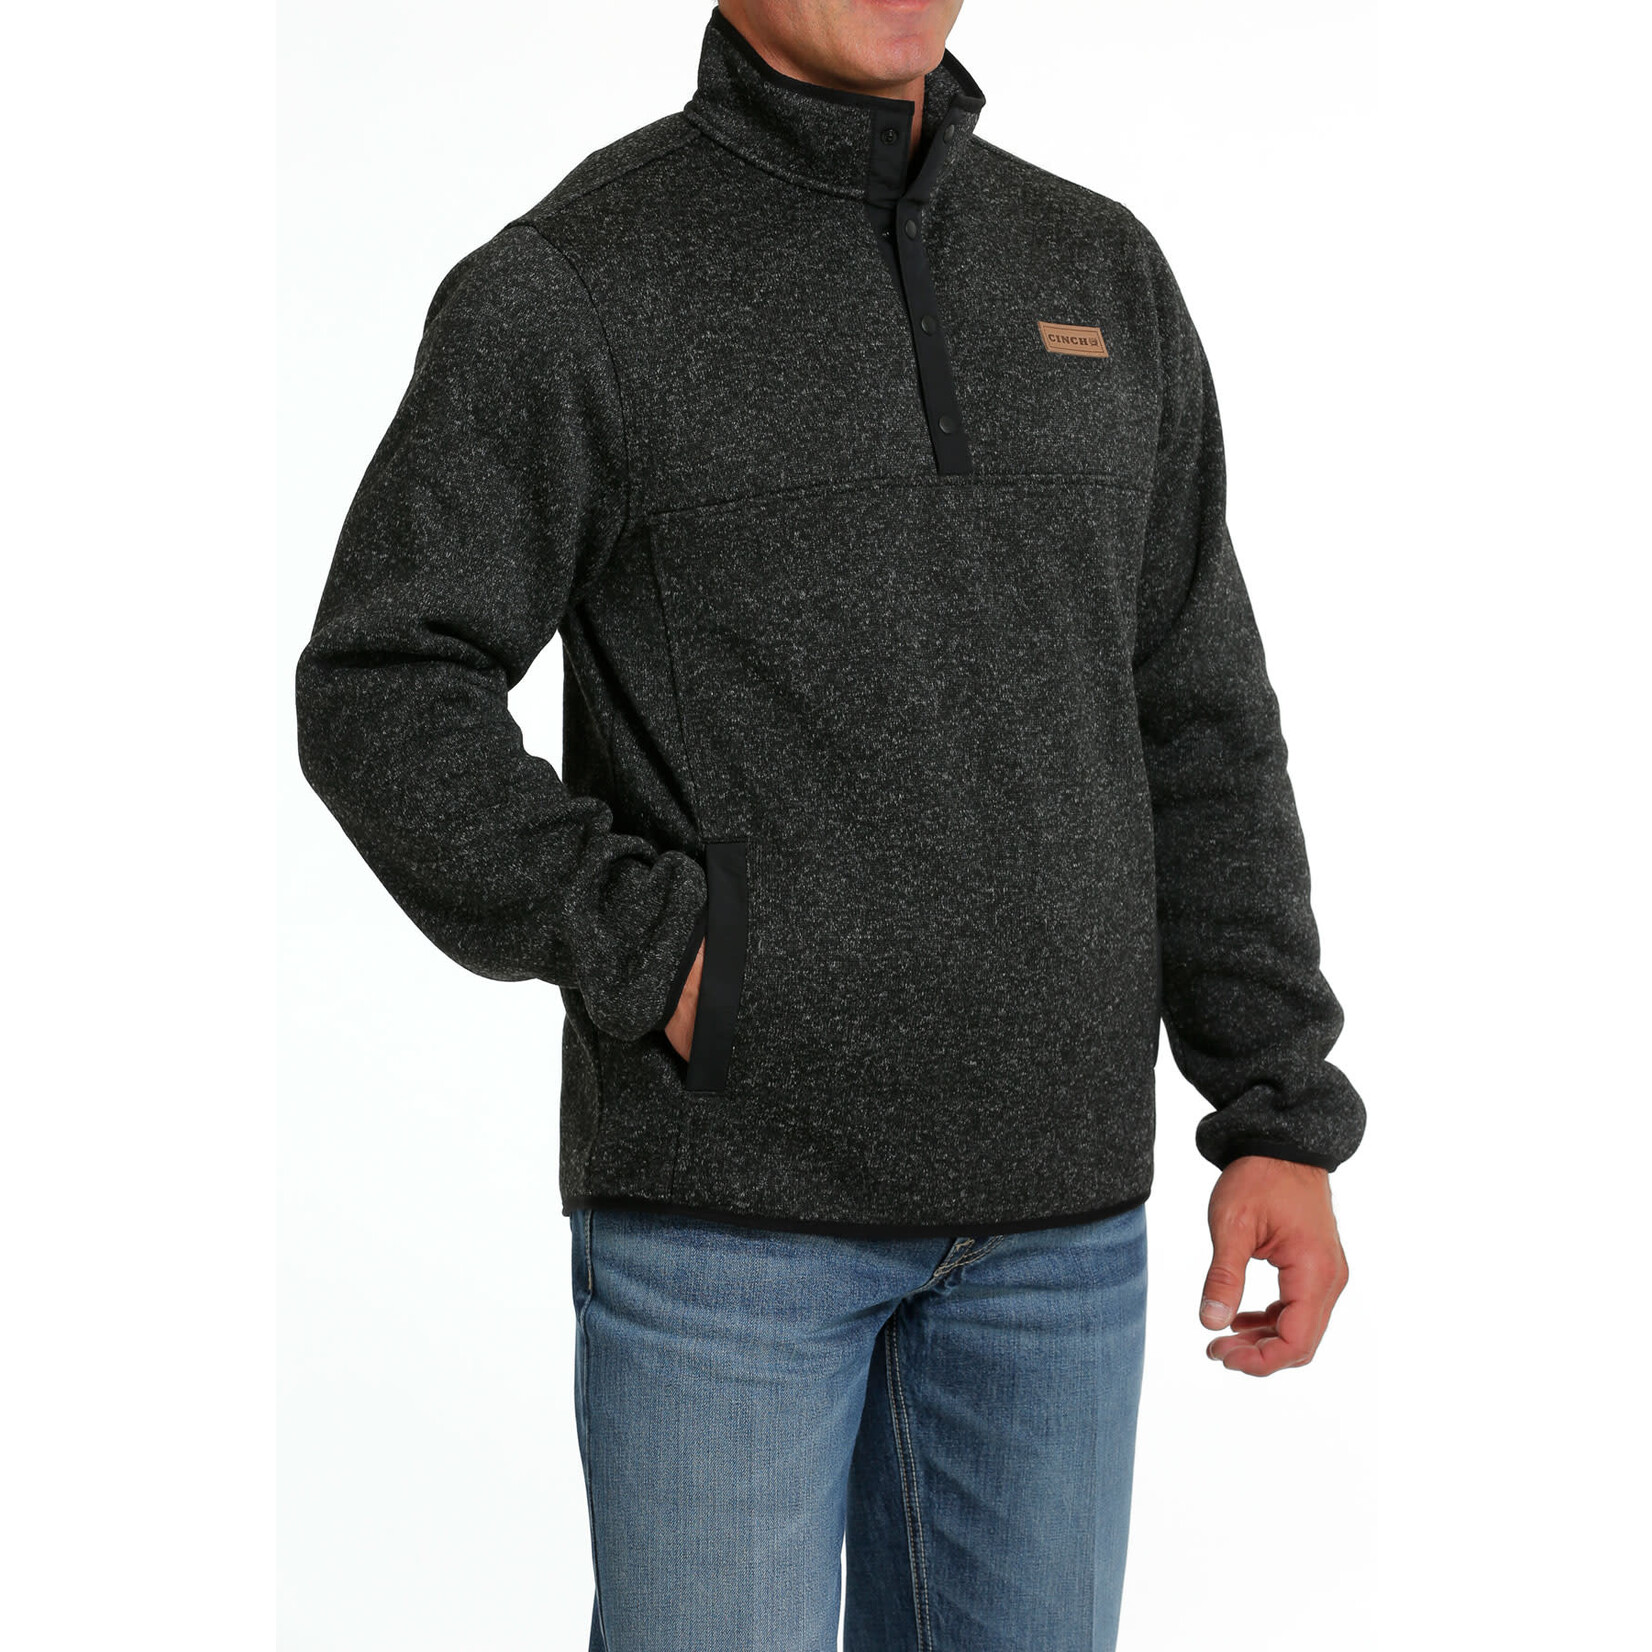 Cinch Cinch MWK1534004 Men's Pullover Sweater Charcoal